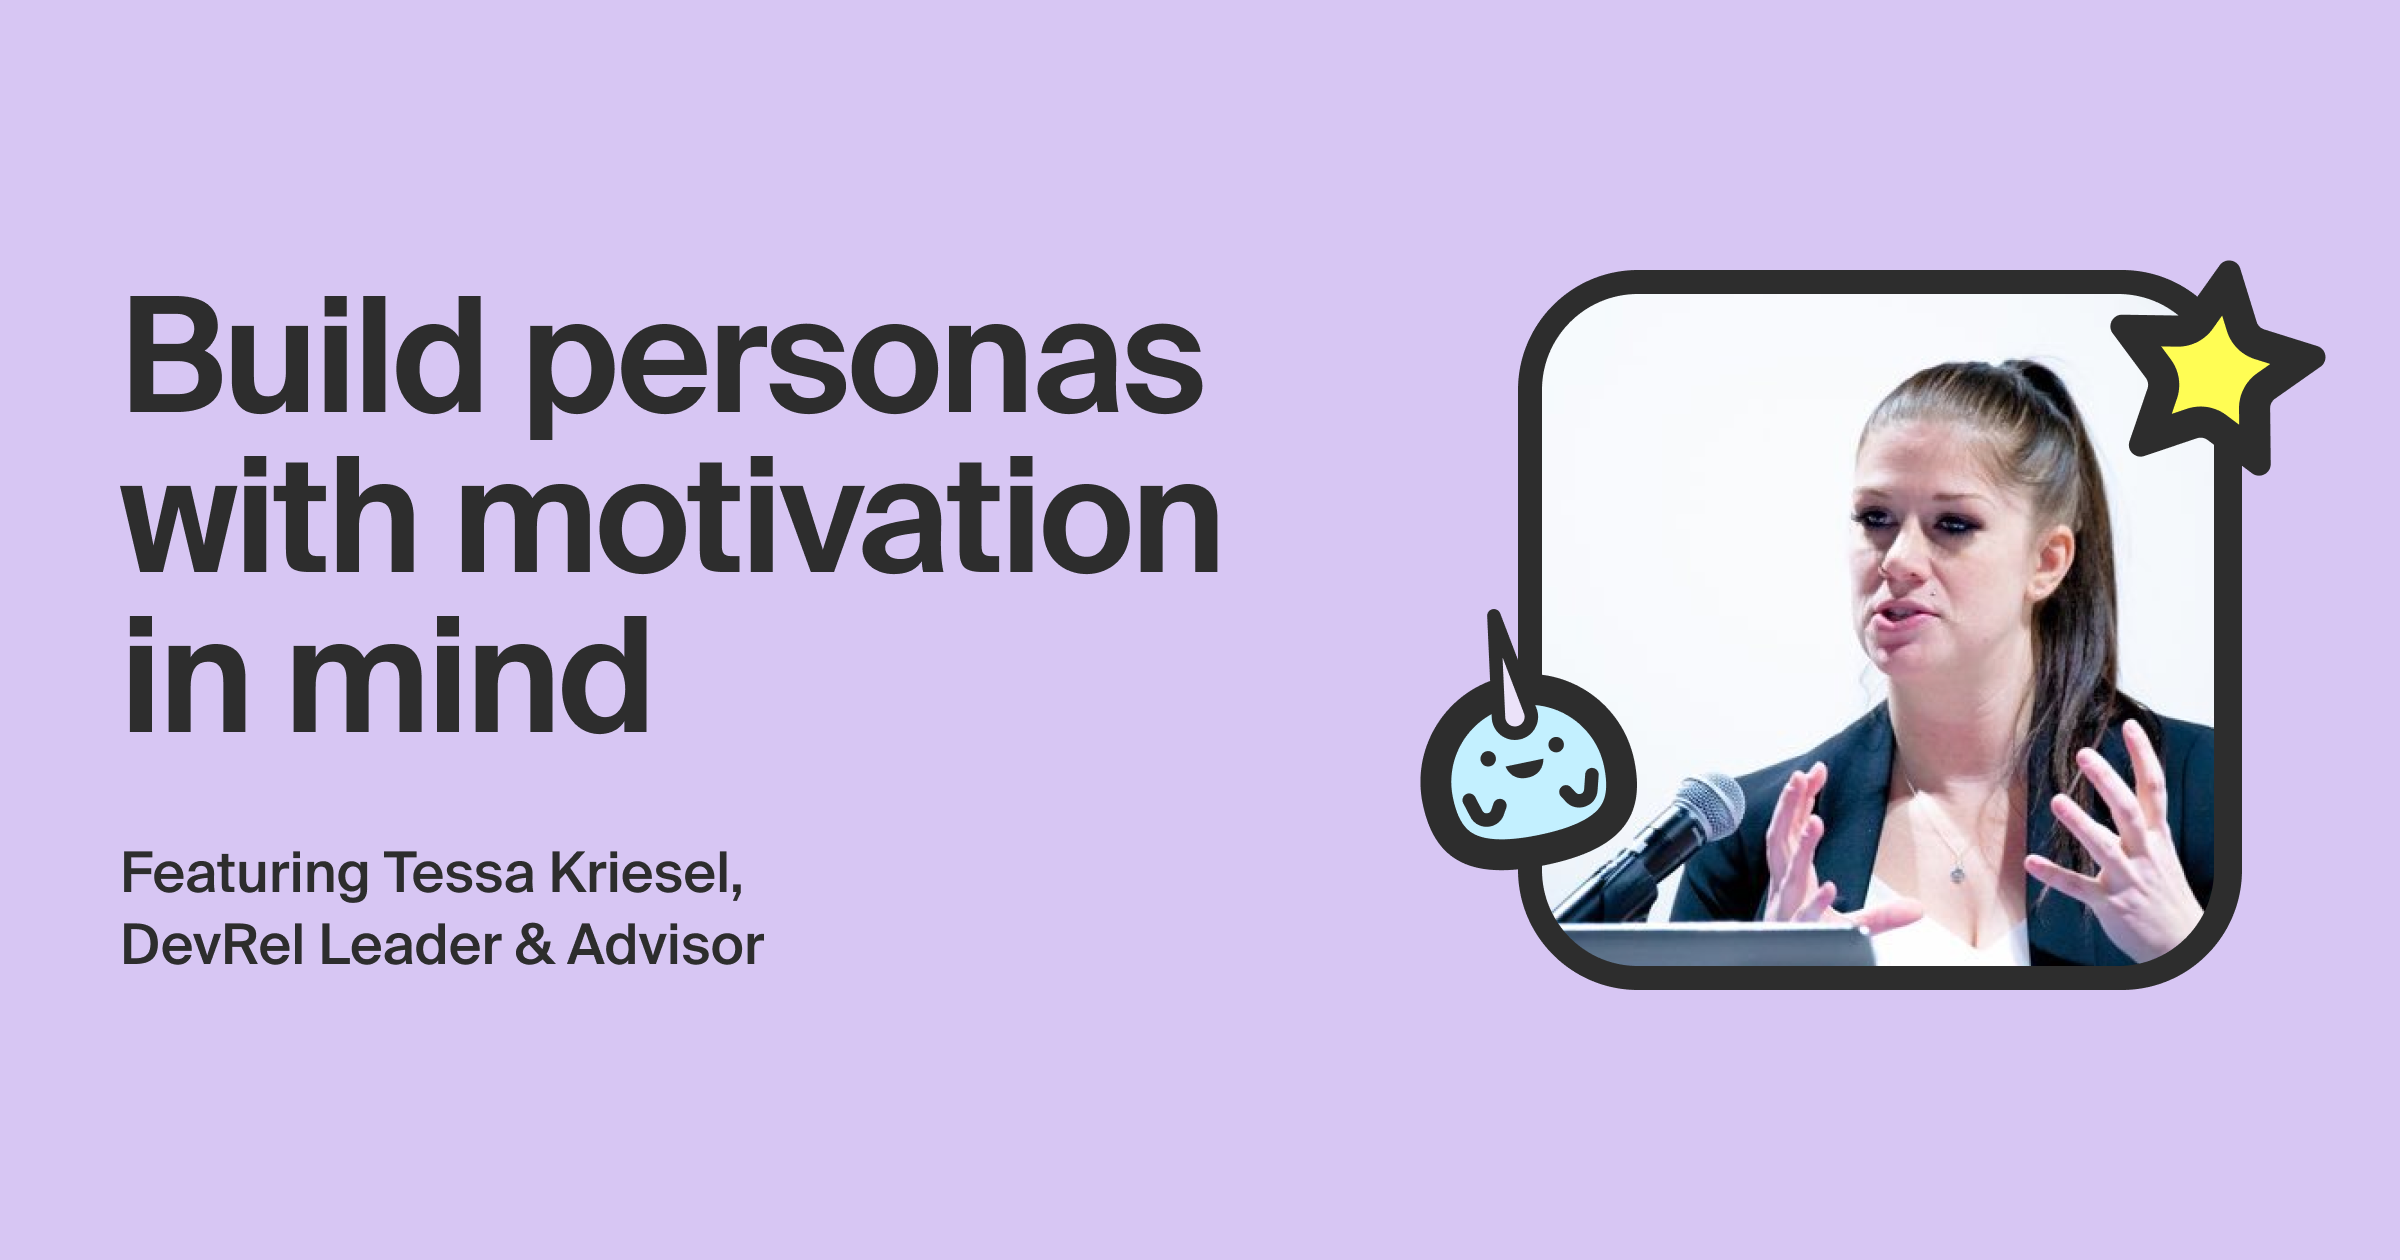 Build personas with motivation in mind featuring Tessa Kriesel, DevRel Leader & Advisor